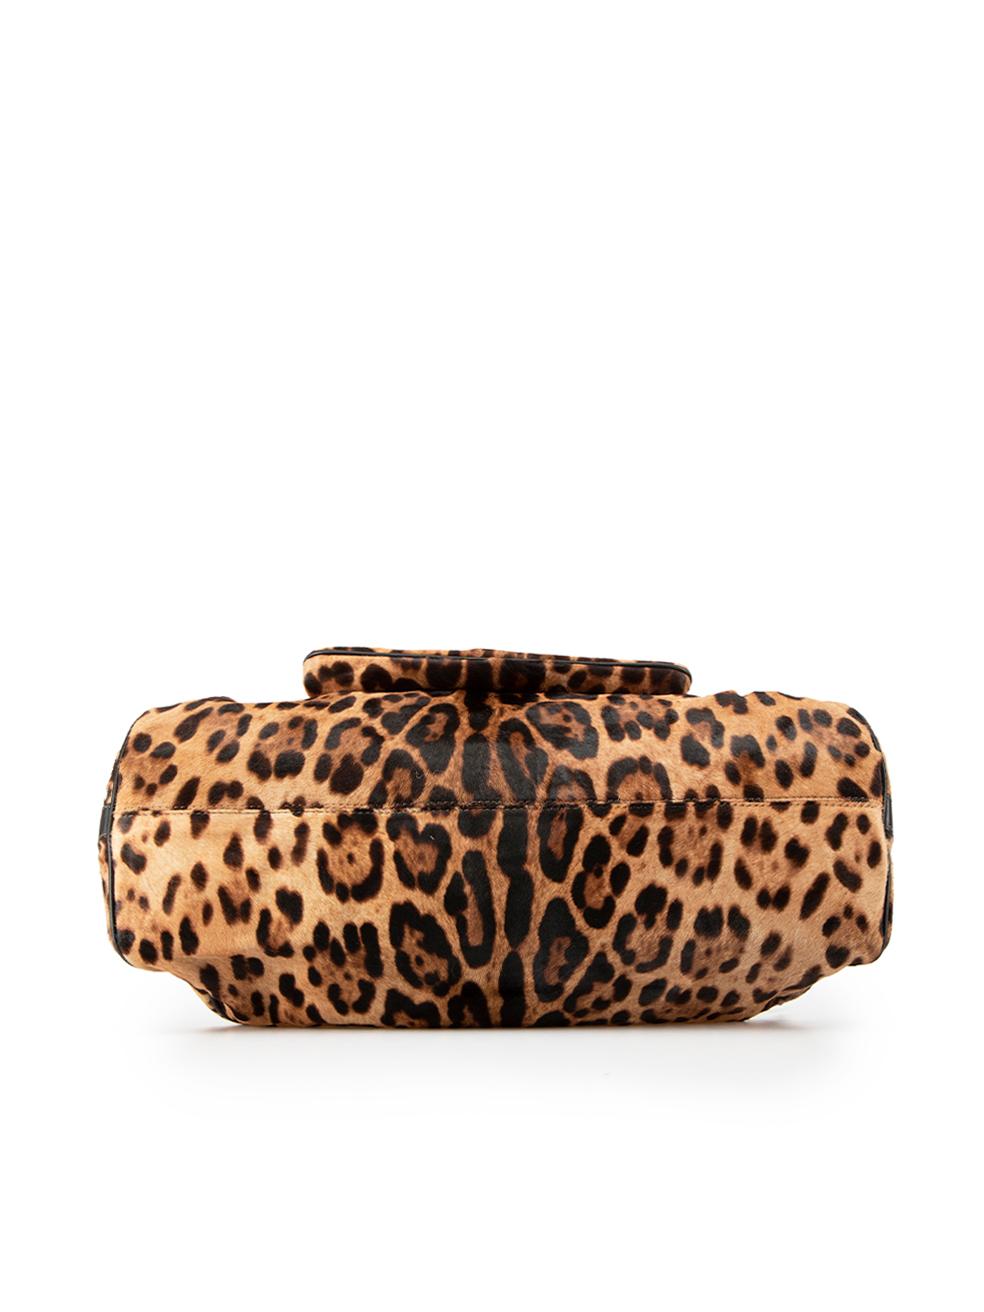 Women's Dolce & Gabbana Brown Pony Hair Leopard Handbag For Sale